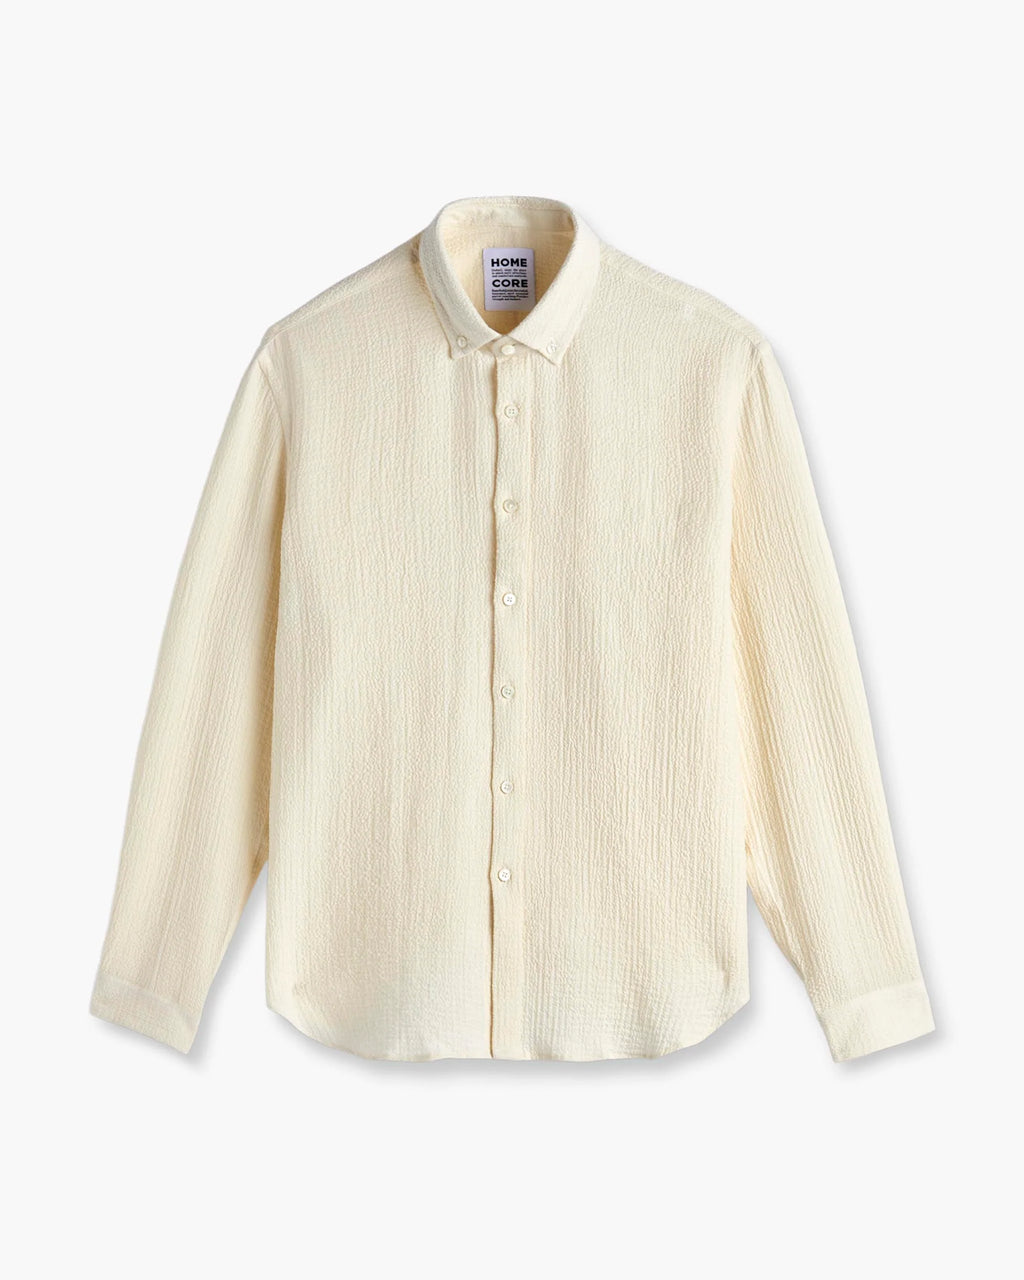 Tokyo Cheveer Long Sleeve Shirt